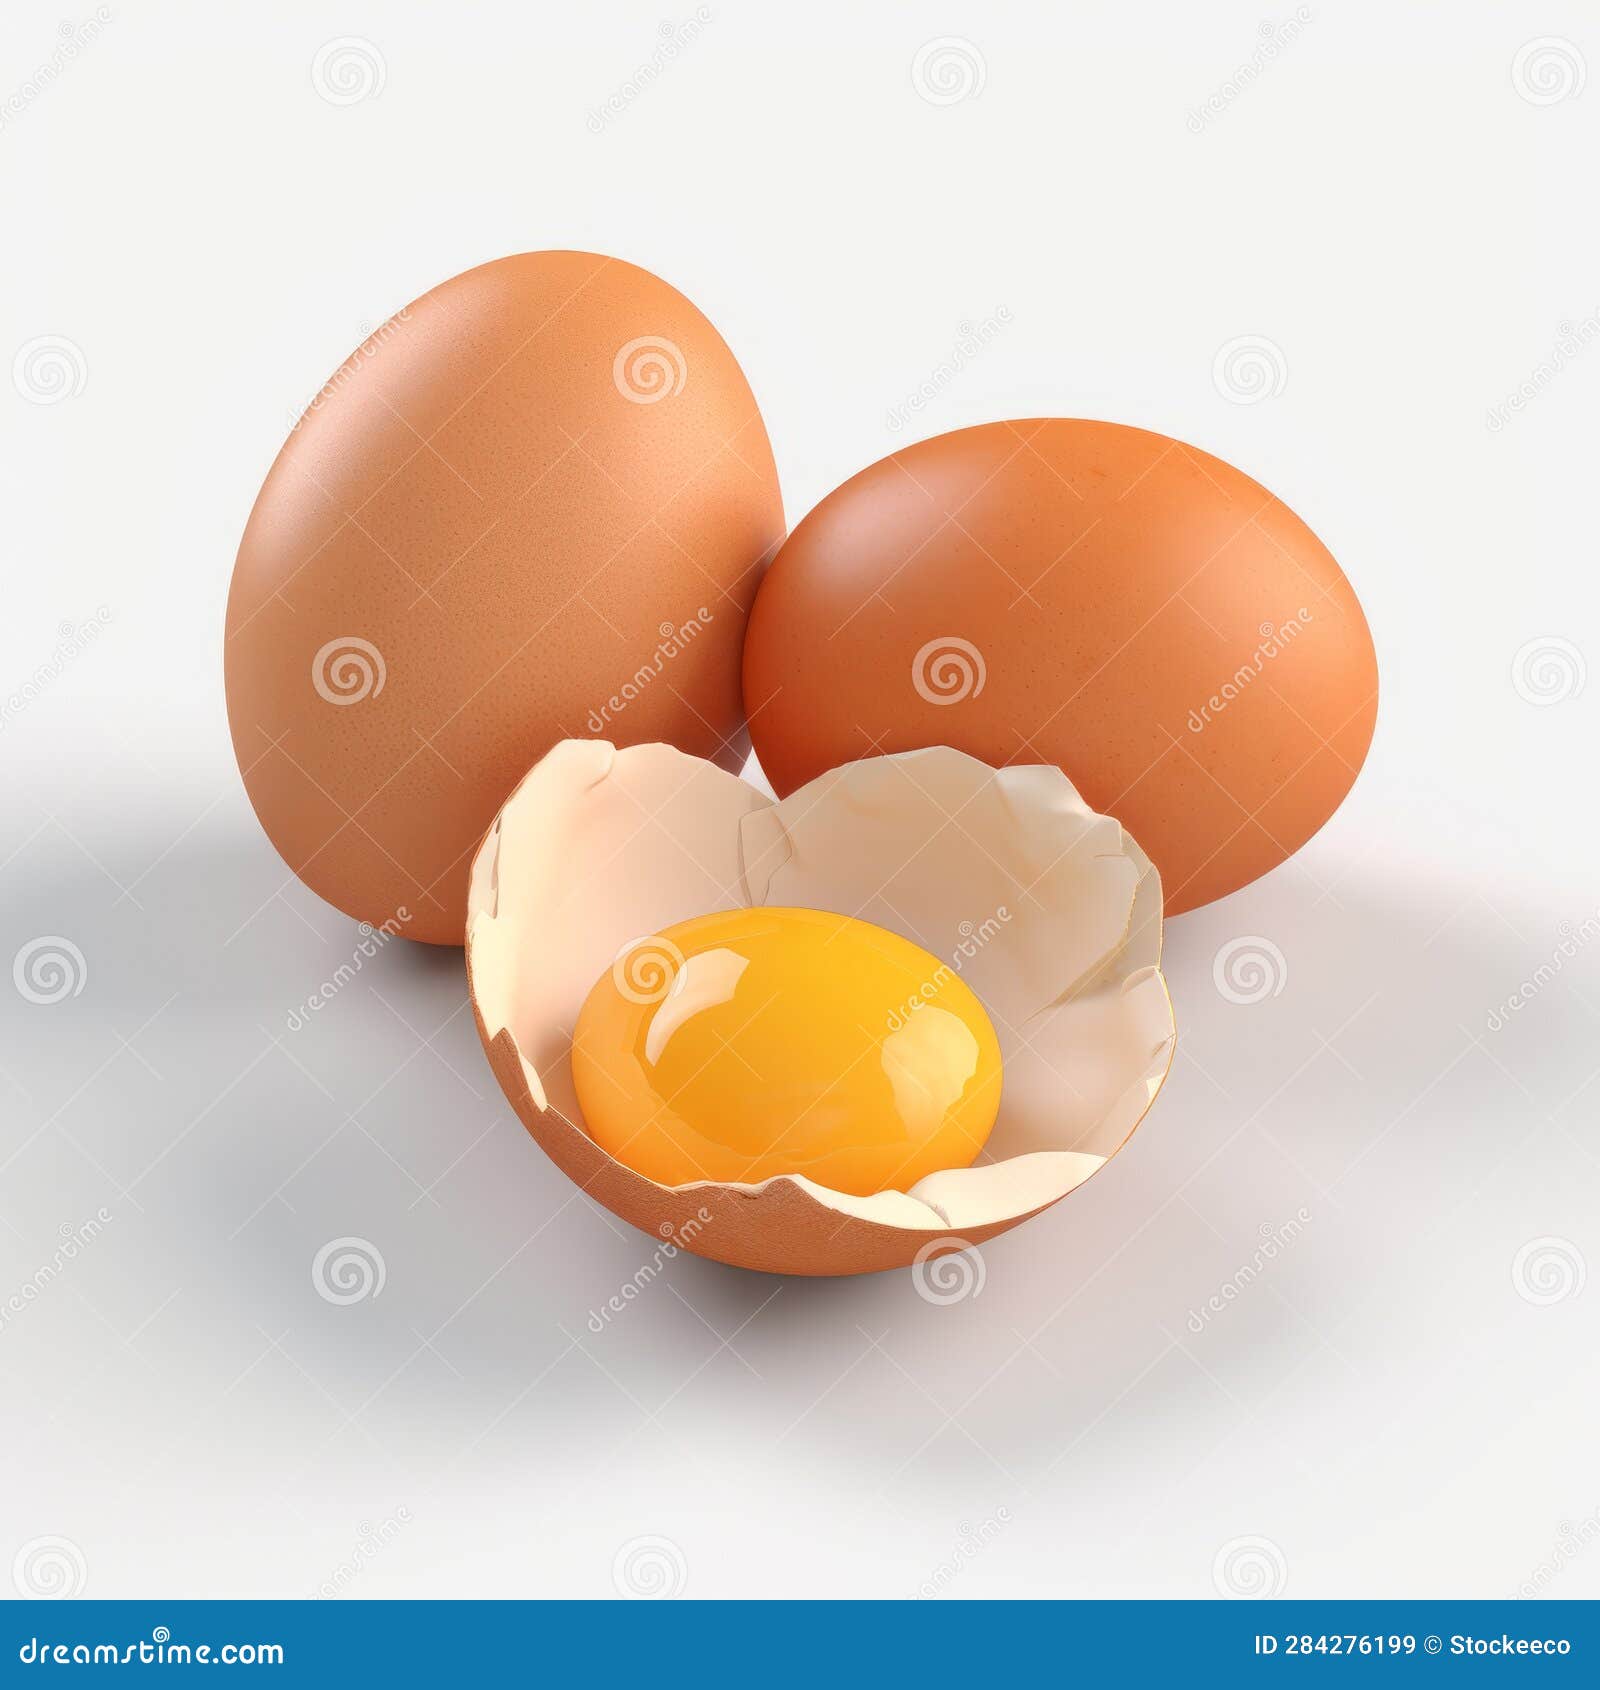 ultra realistic 4k eggs: white egg with hole, two orange eggs - zbrush style